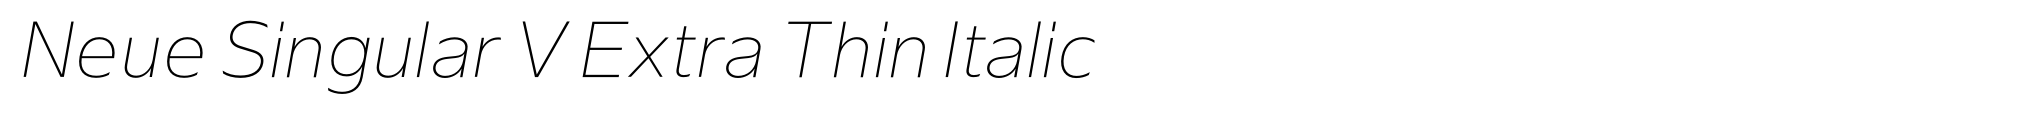 Neue Singular V Extra Thin Italic image